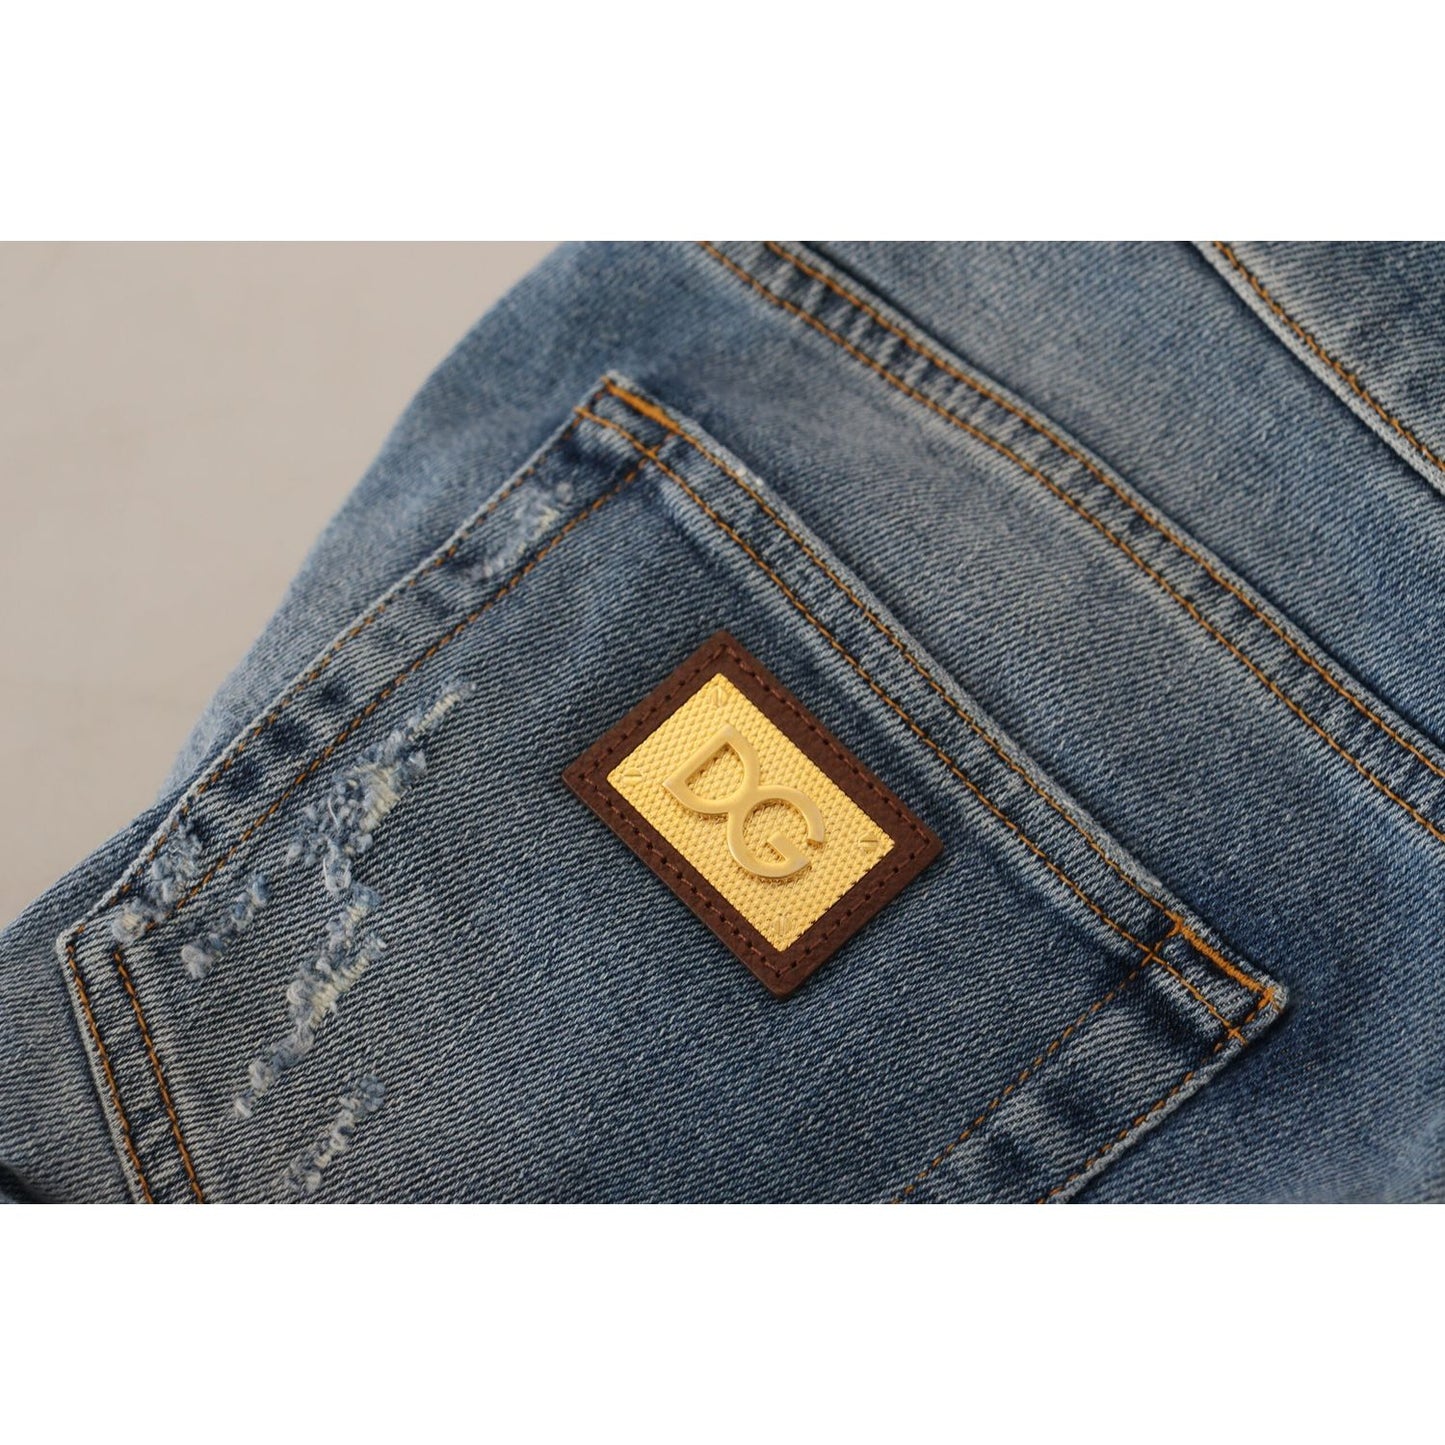 Dolce & Gabbana Chic Slim Fit Italian Denim Jeans blue-slim-fit-tattered-cotton-denim-jeans IMG_6149-scaled-359f36a4-230.jpg